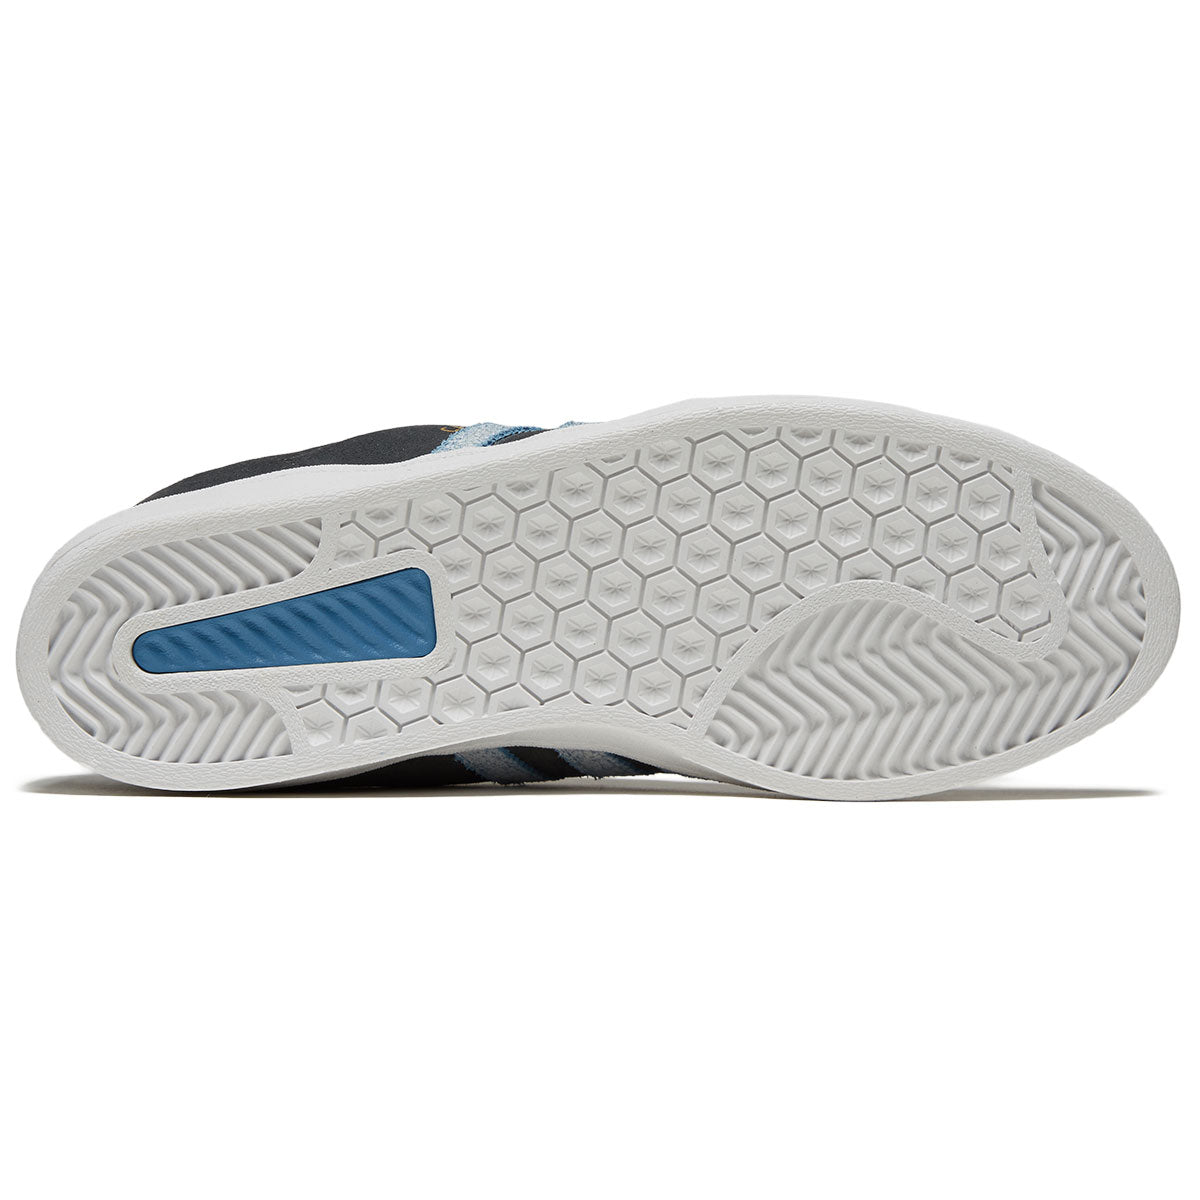 Adidas x Henry Jones Campus ADV Shoes - Carbon/White/Light Blue image 4